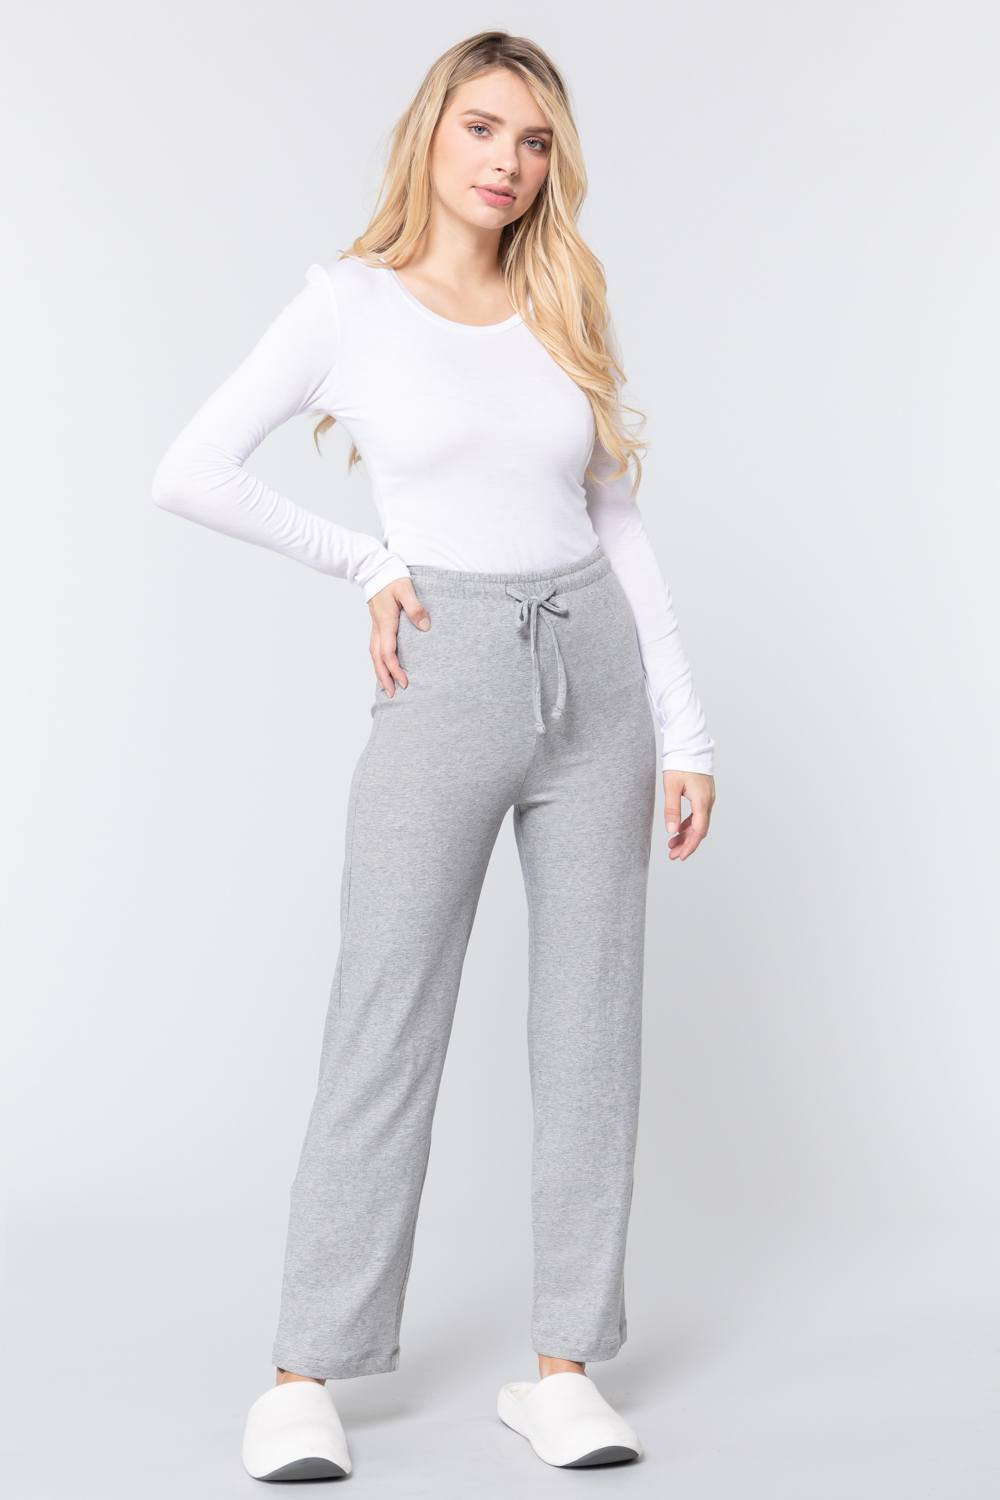 Grey 100% Cotton Pajama Pants